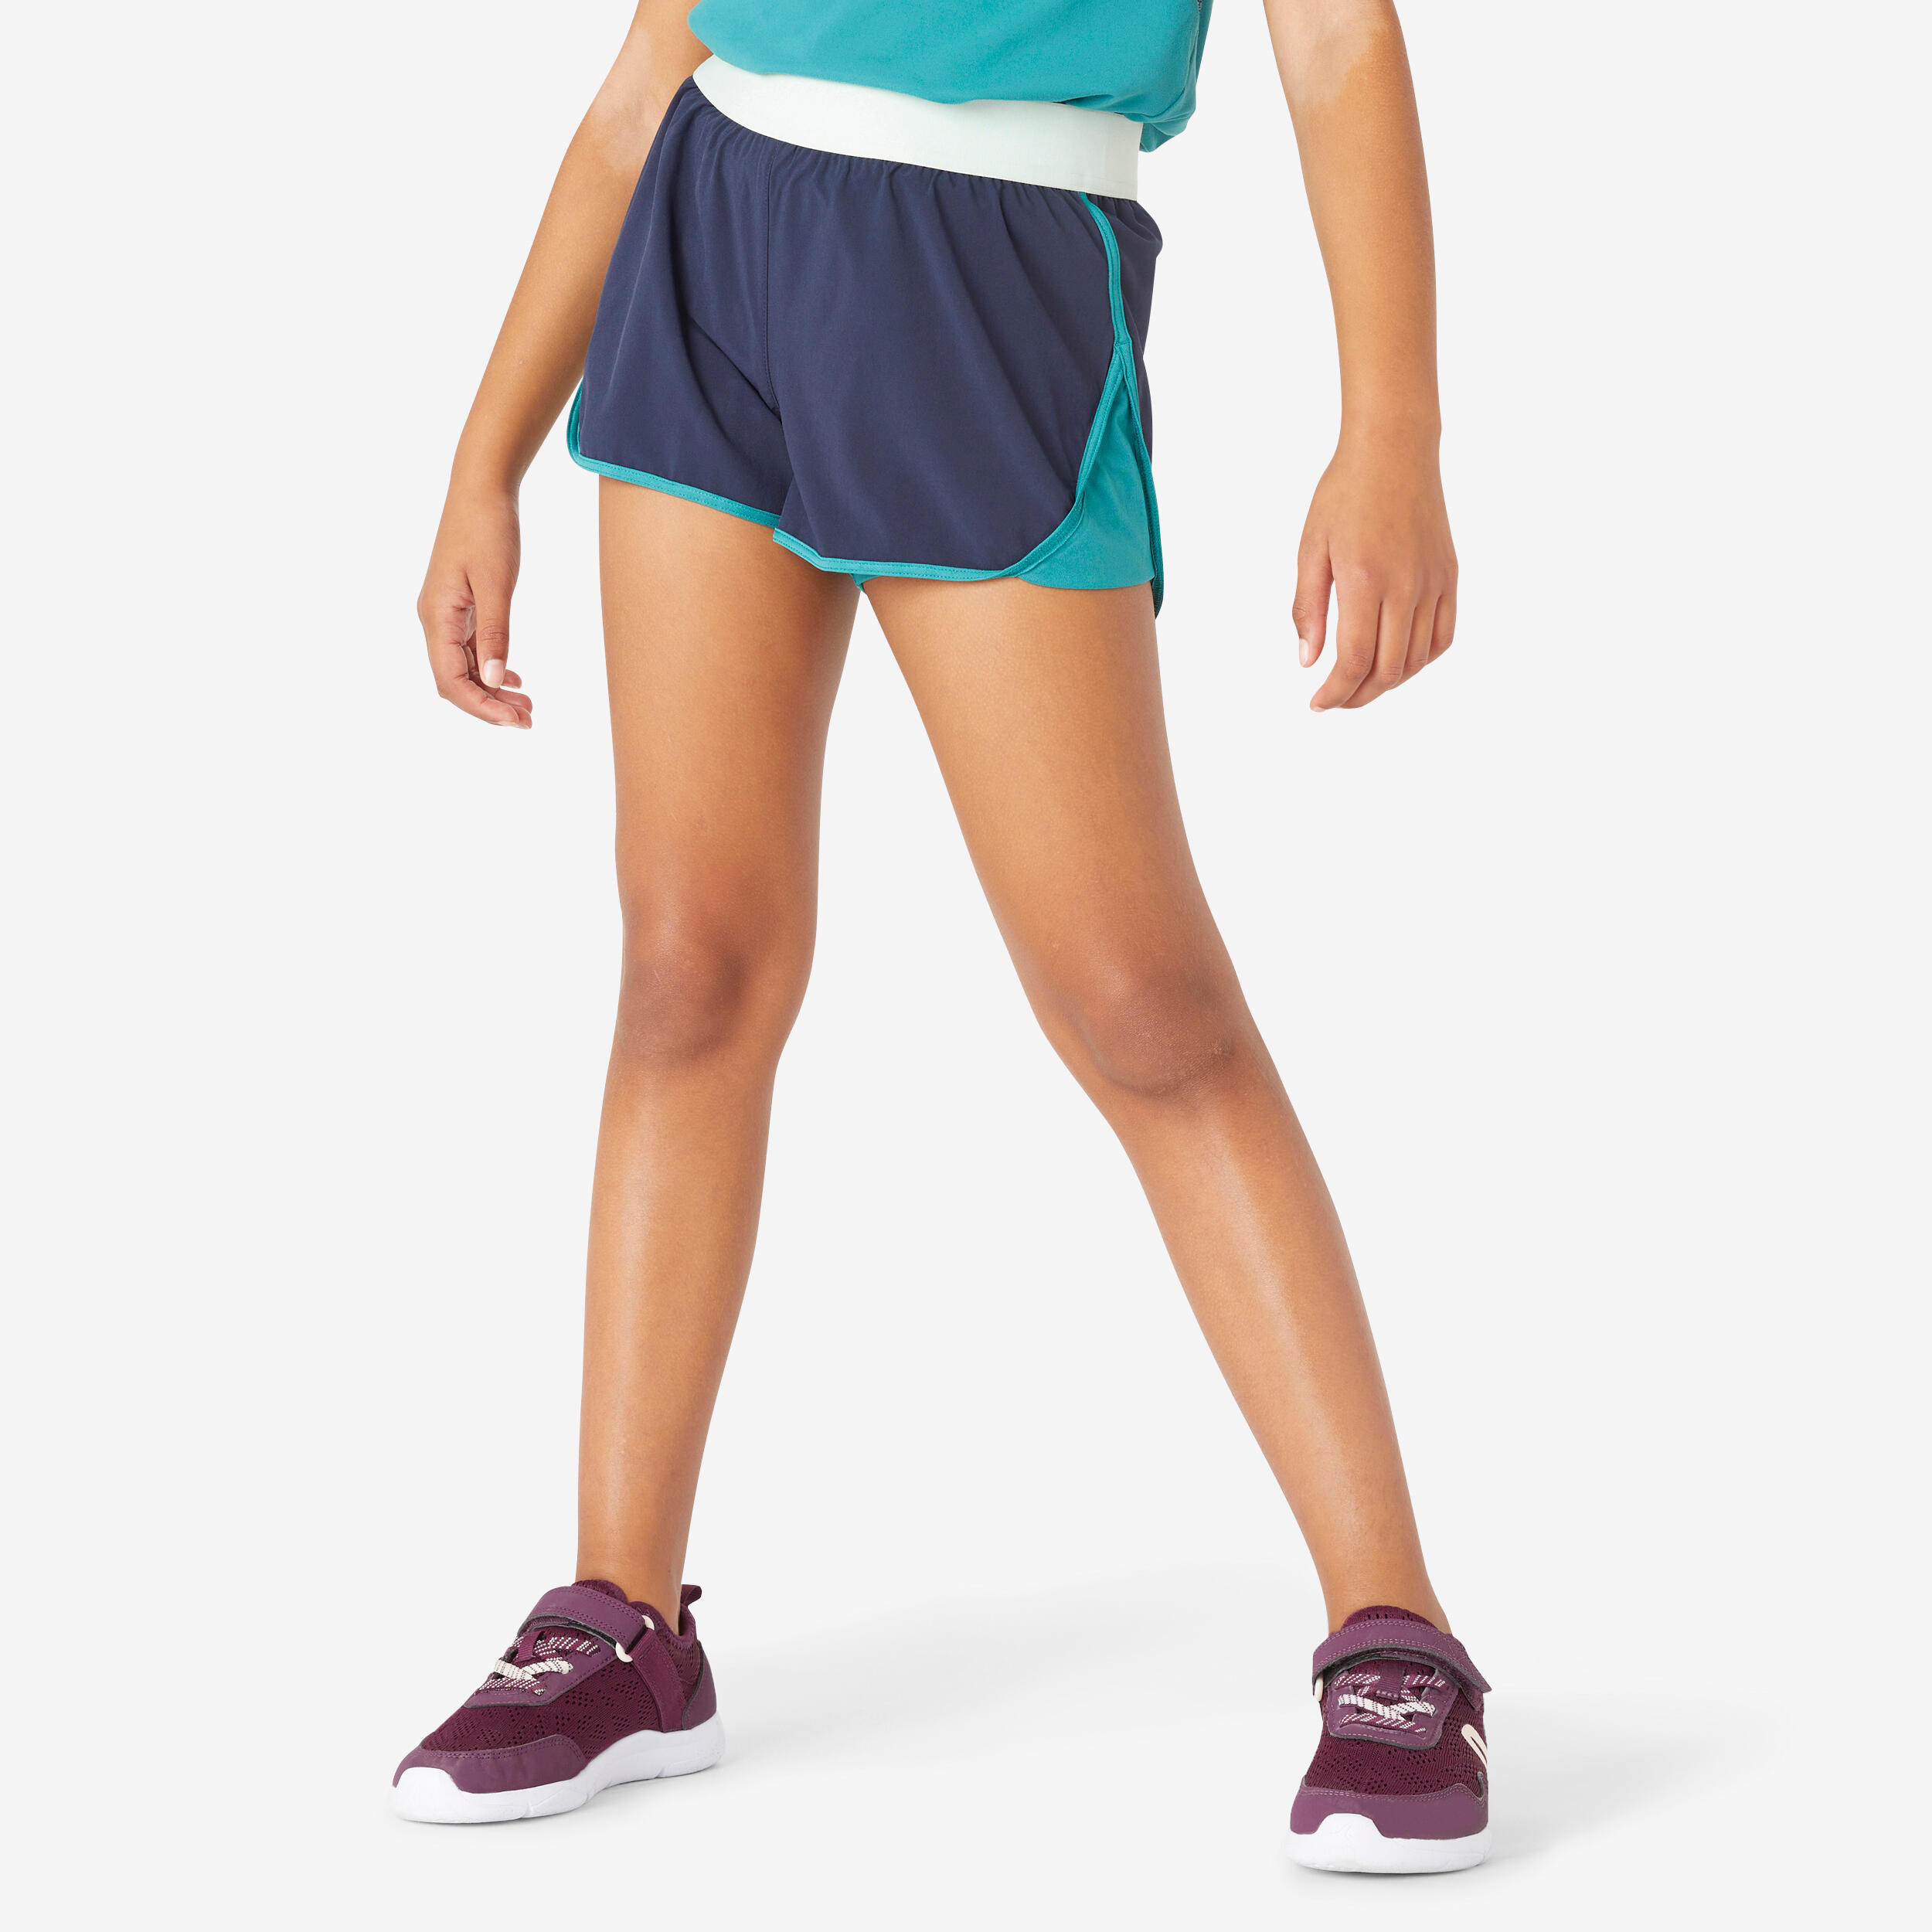 Resinta 5 Packs Girls Shorts Summer Running Athletic Shorts Cotton